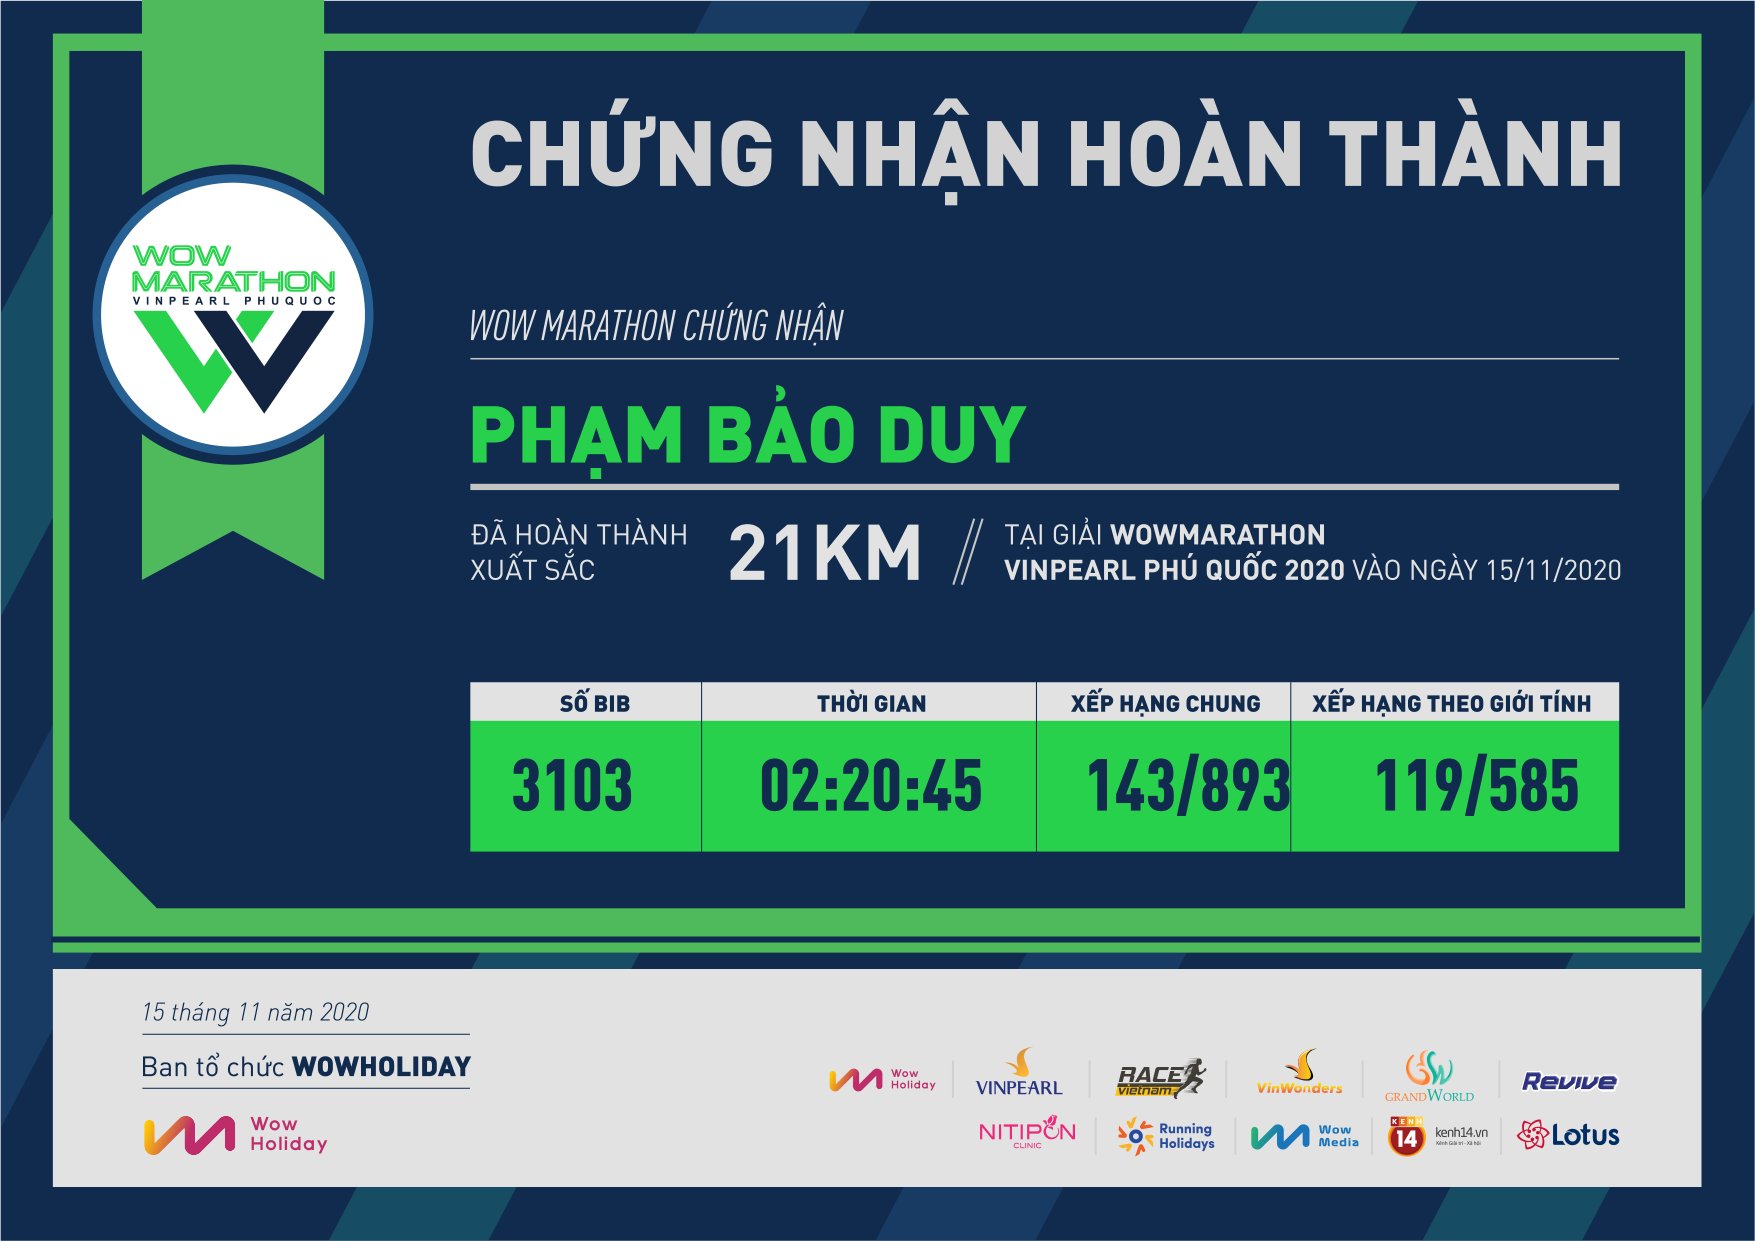 3103 - Phạm Bảo Duy